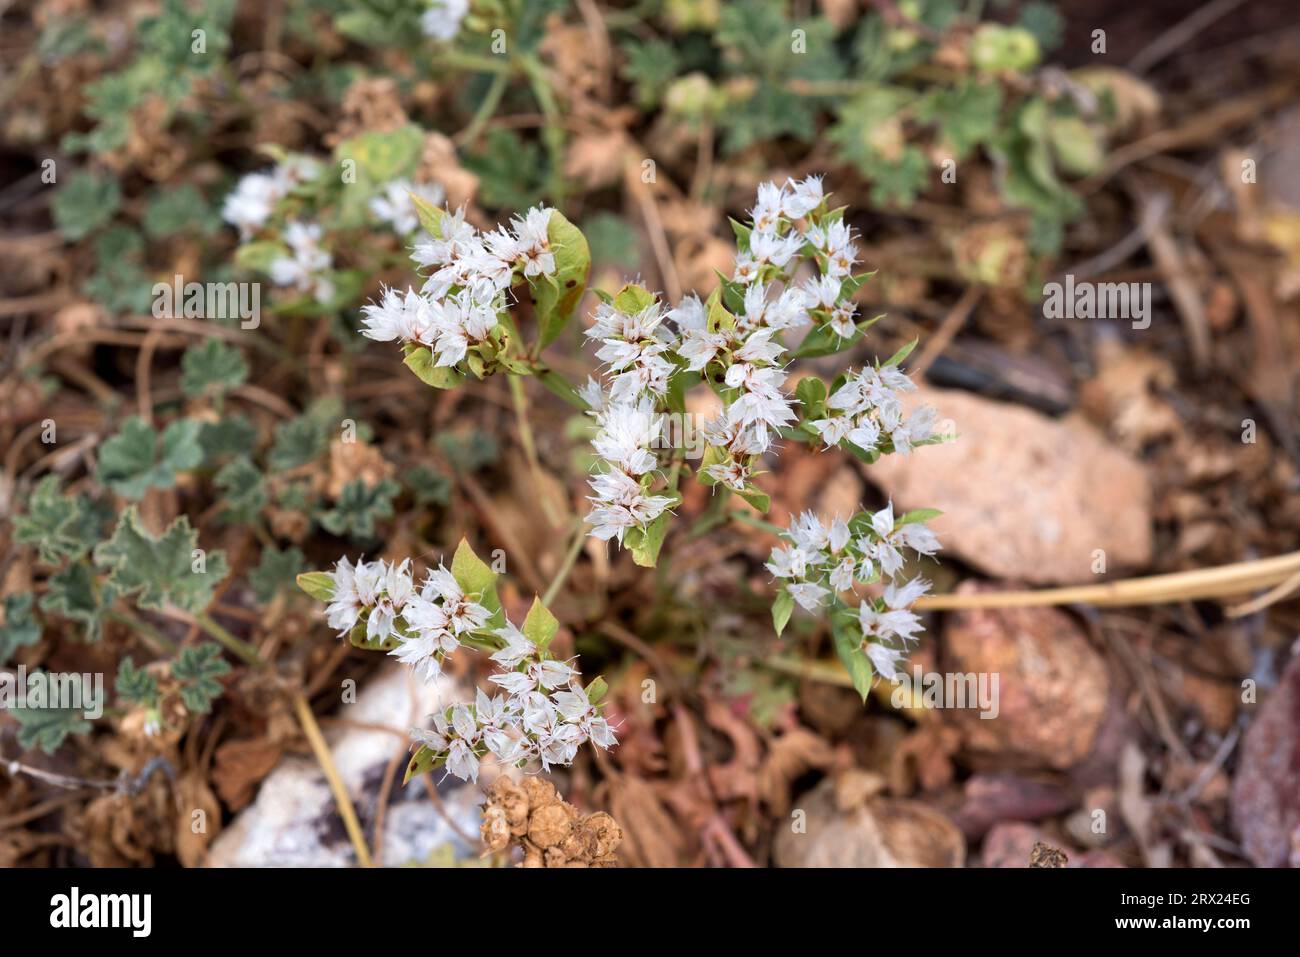 Saladilla (Limonium lobatum) is a perennial plant endemic to southeast Spain. This photo was taken in Cabo de Gata, Almería, Andalusia, Spain. Stock Photo